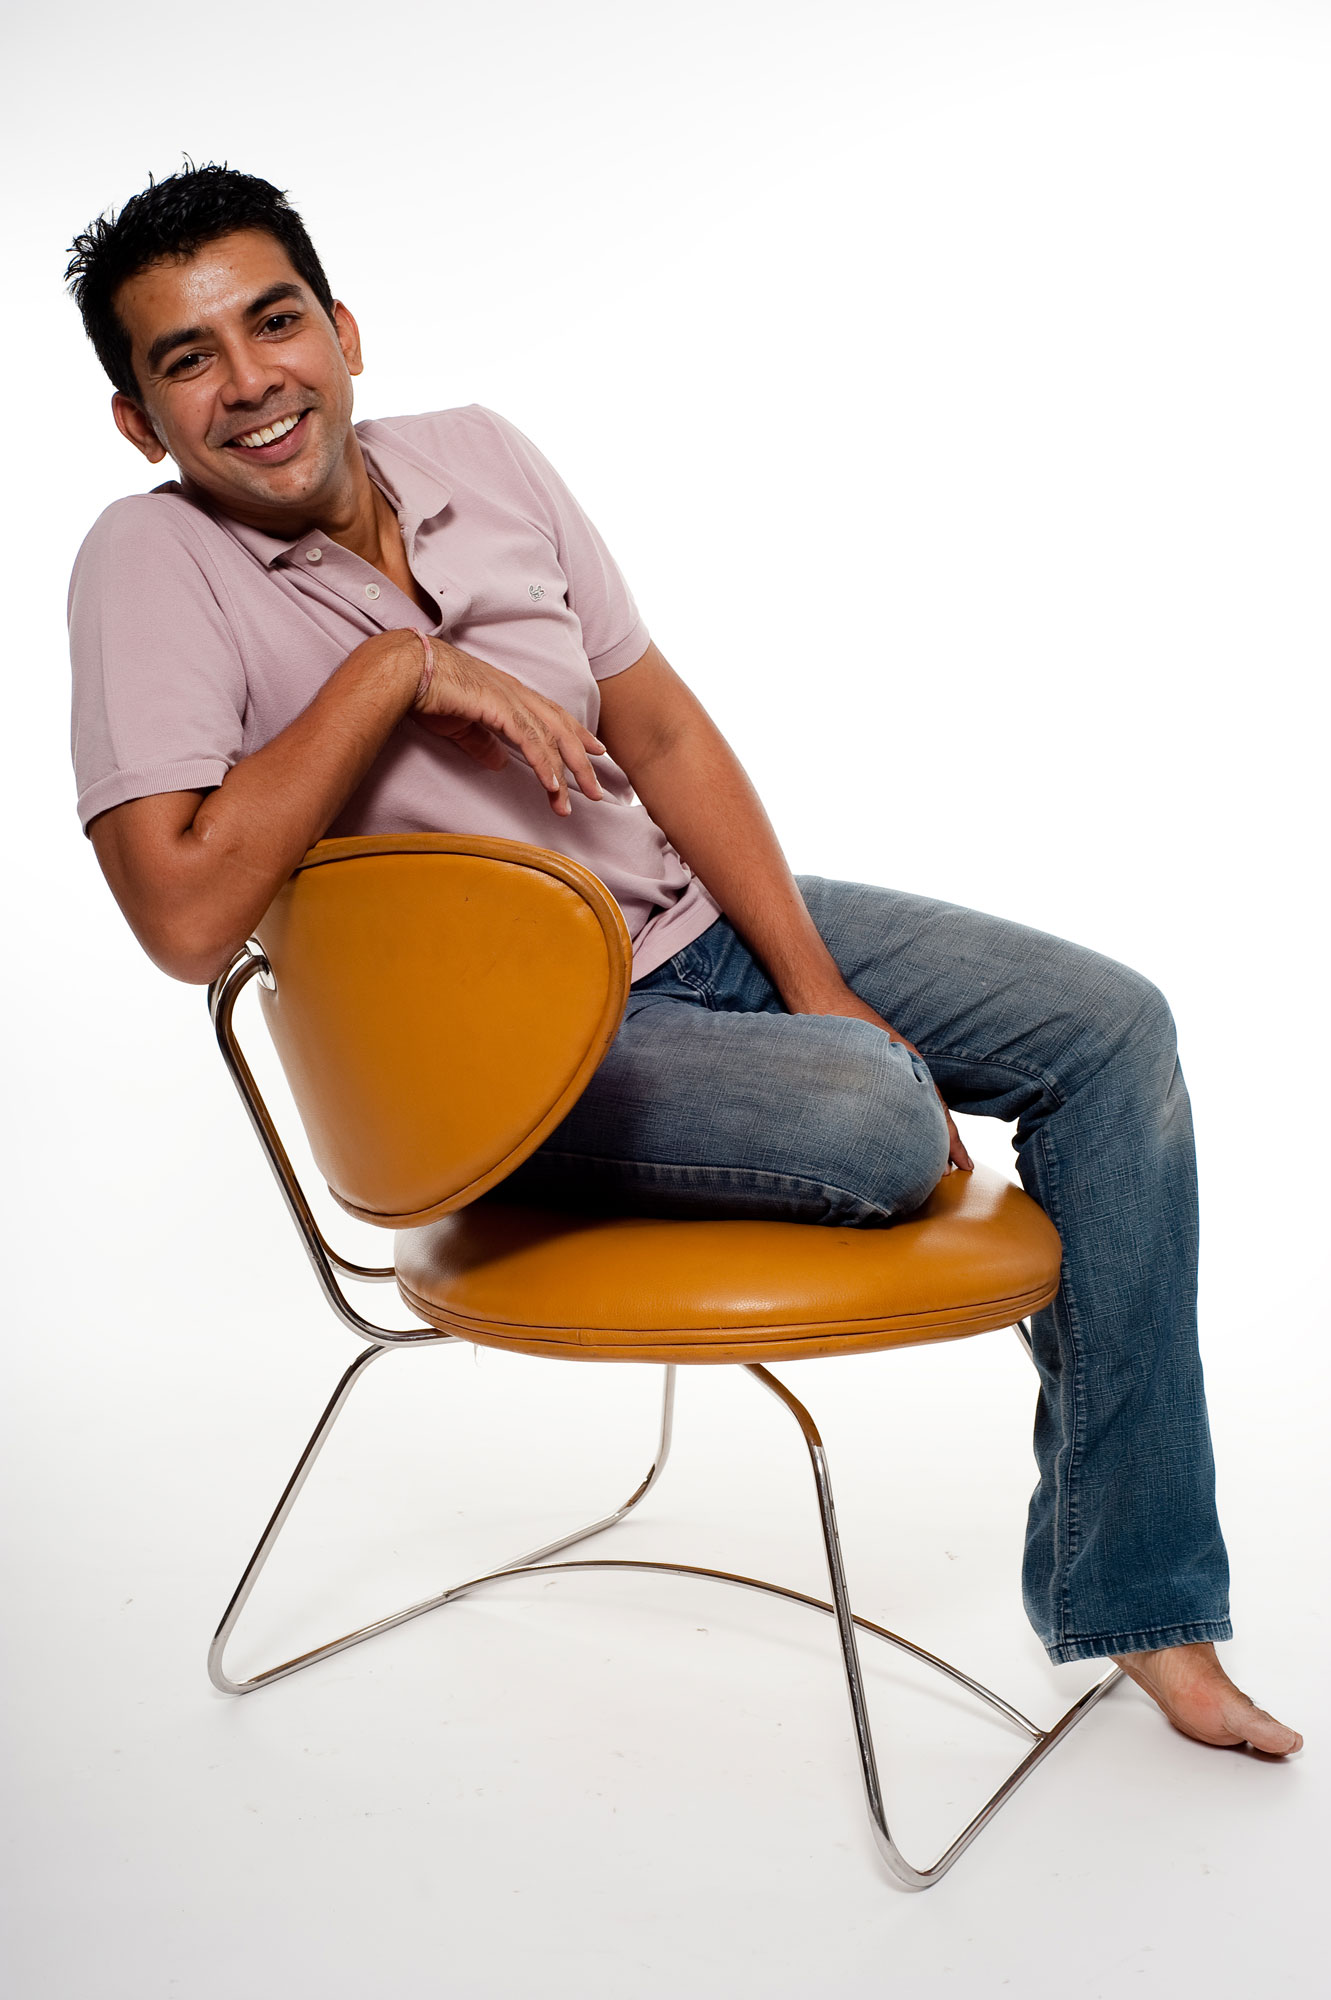 A portrait of Ayush Kasliwal